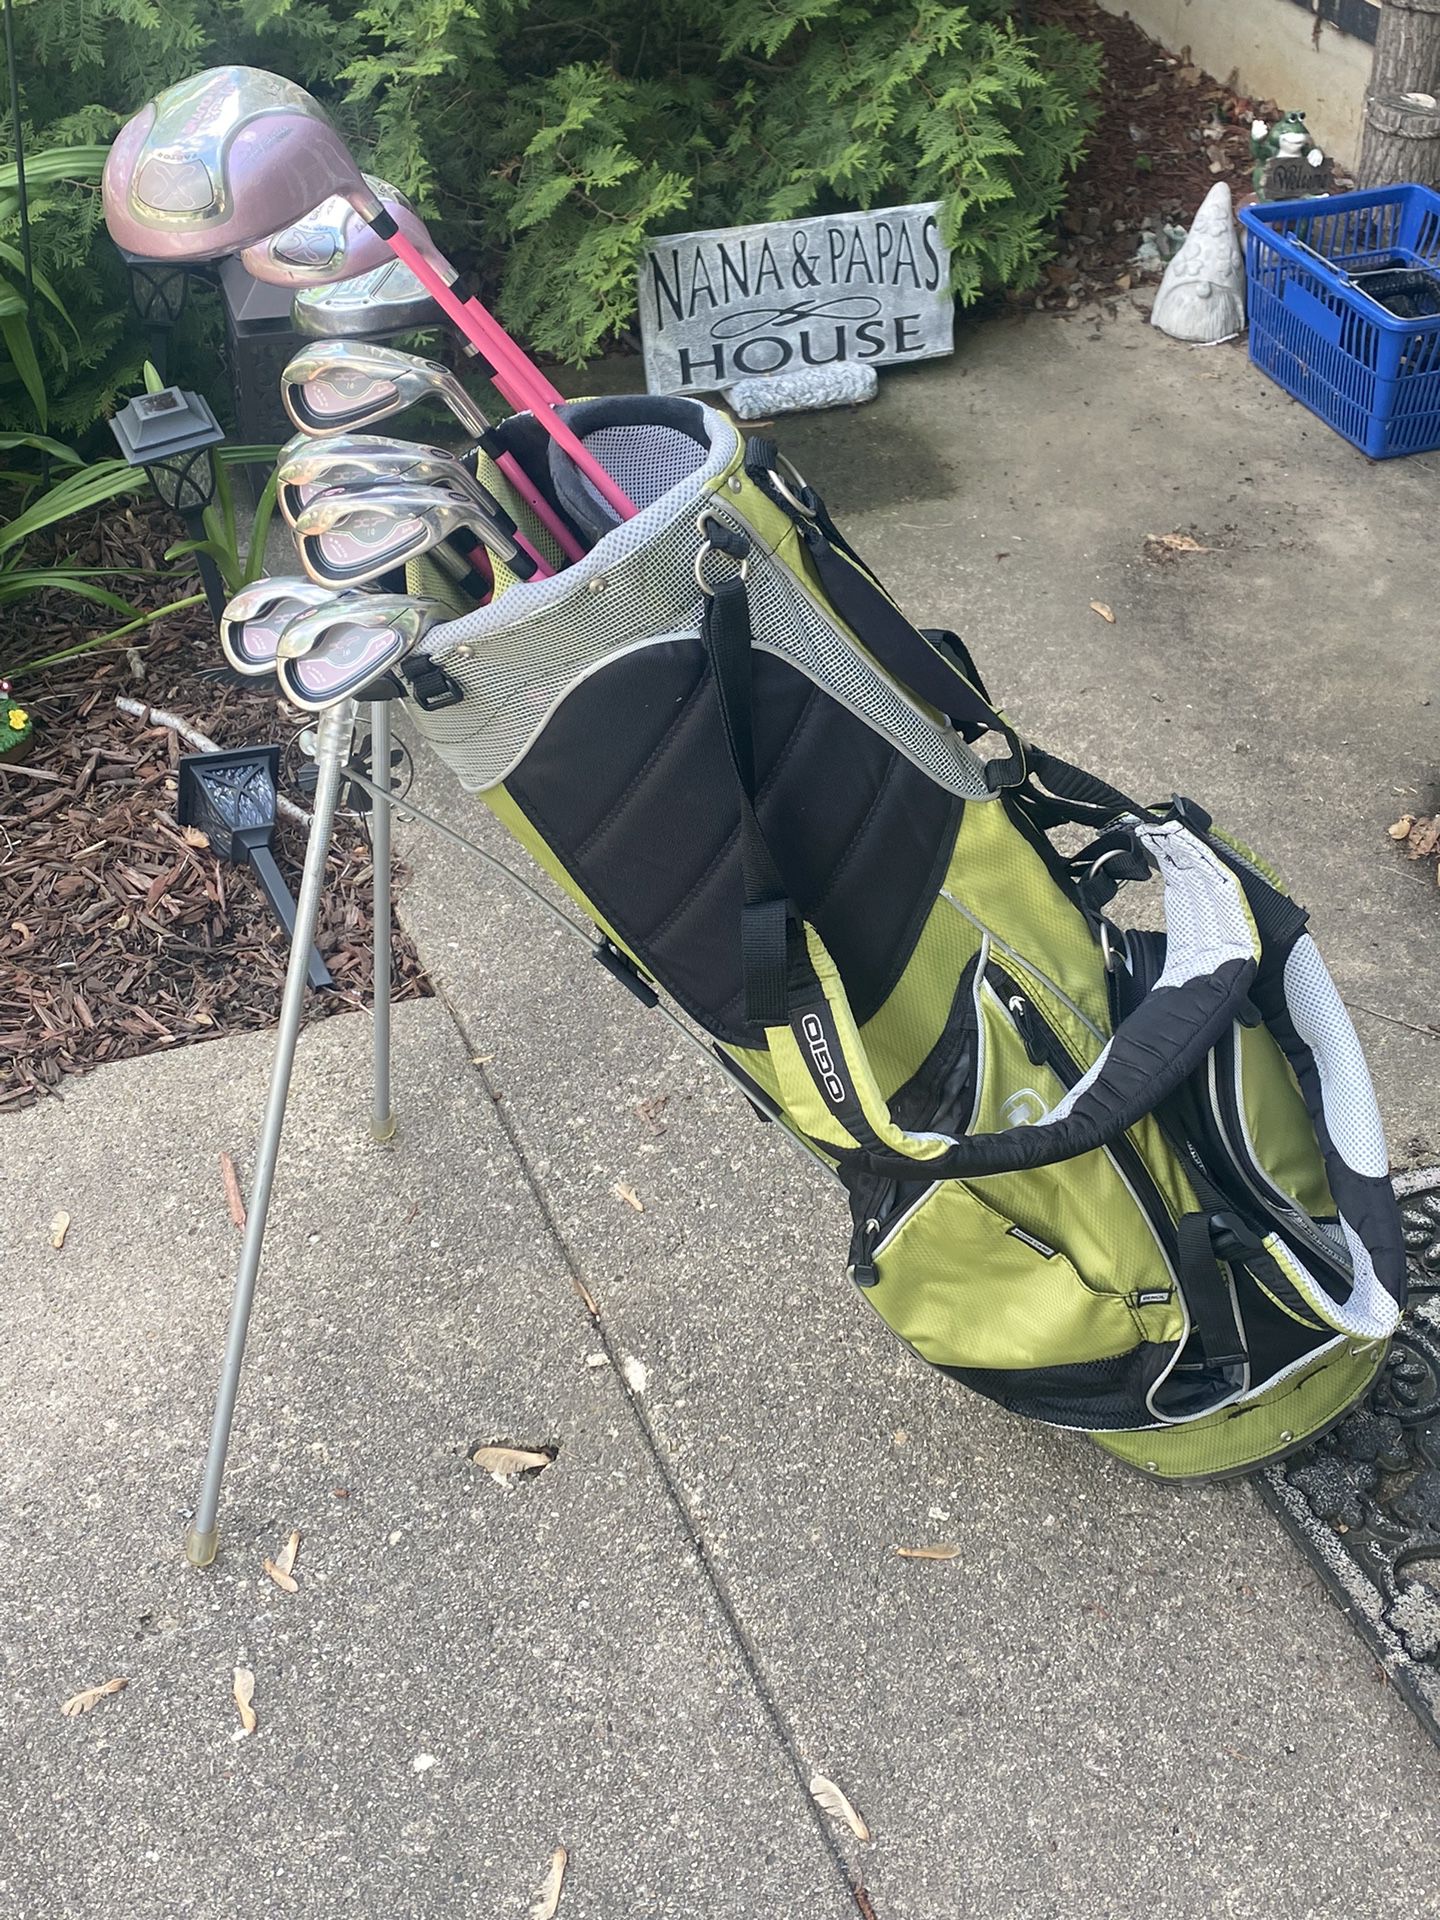 Ladies RH Complete Golf Set